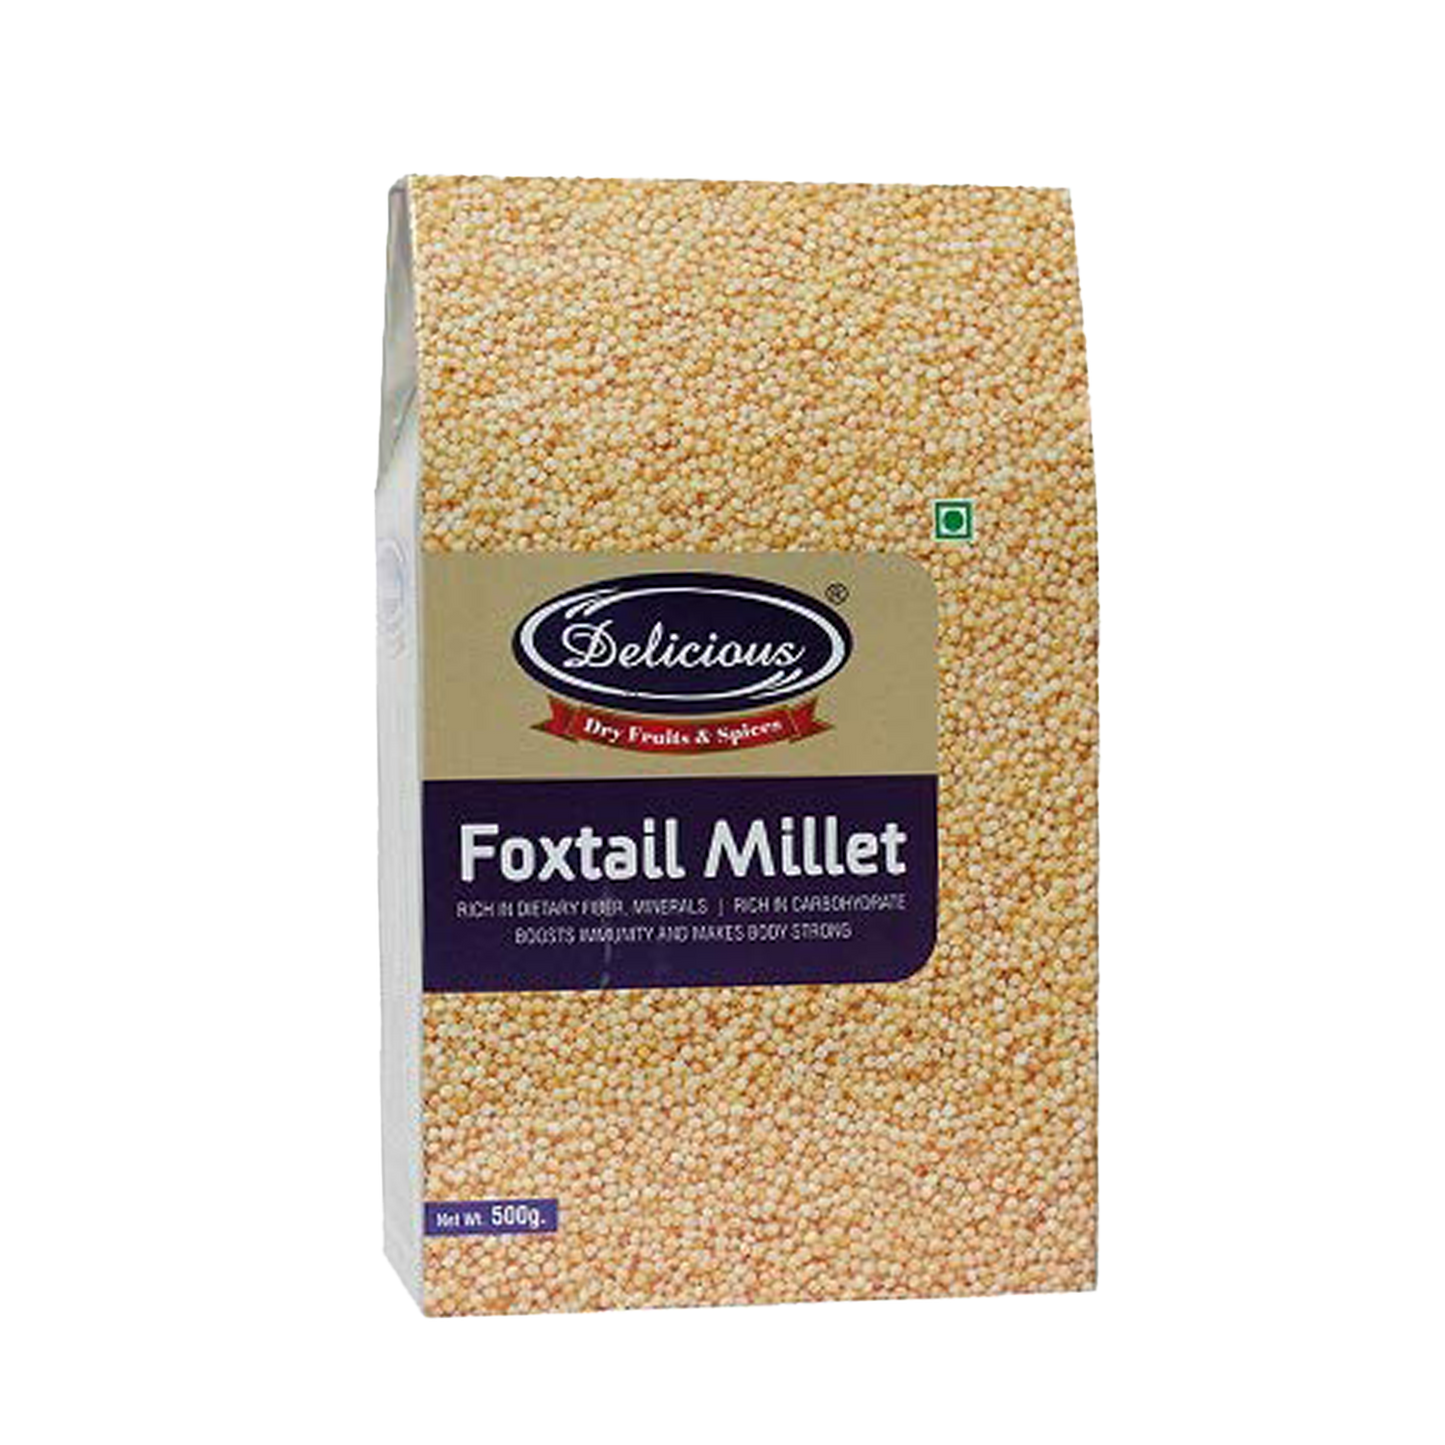 Delicious Foxtail Millets